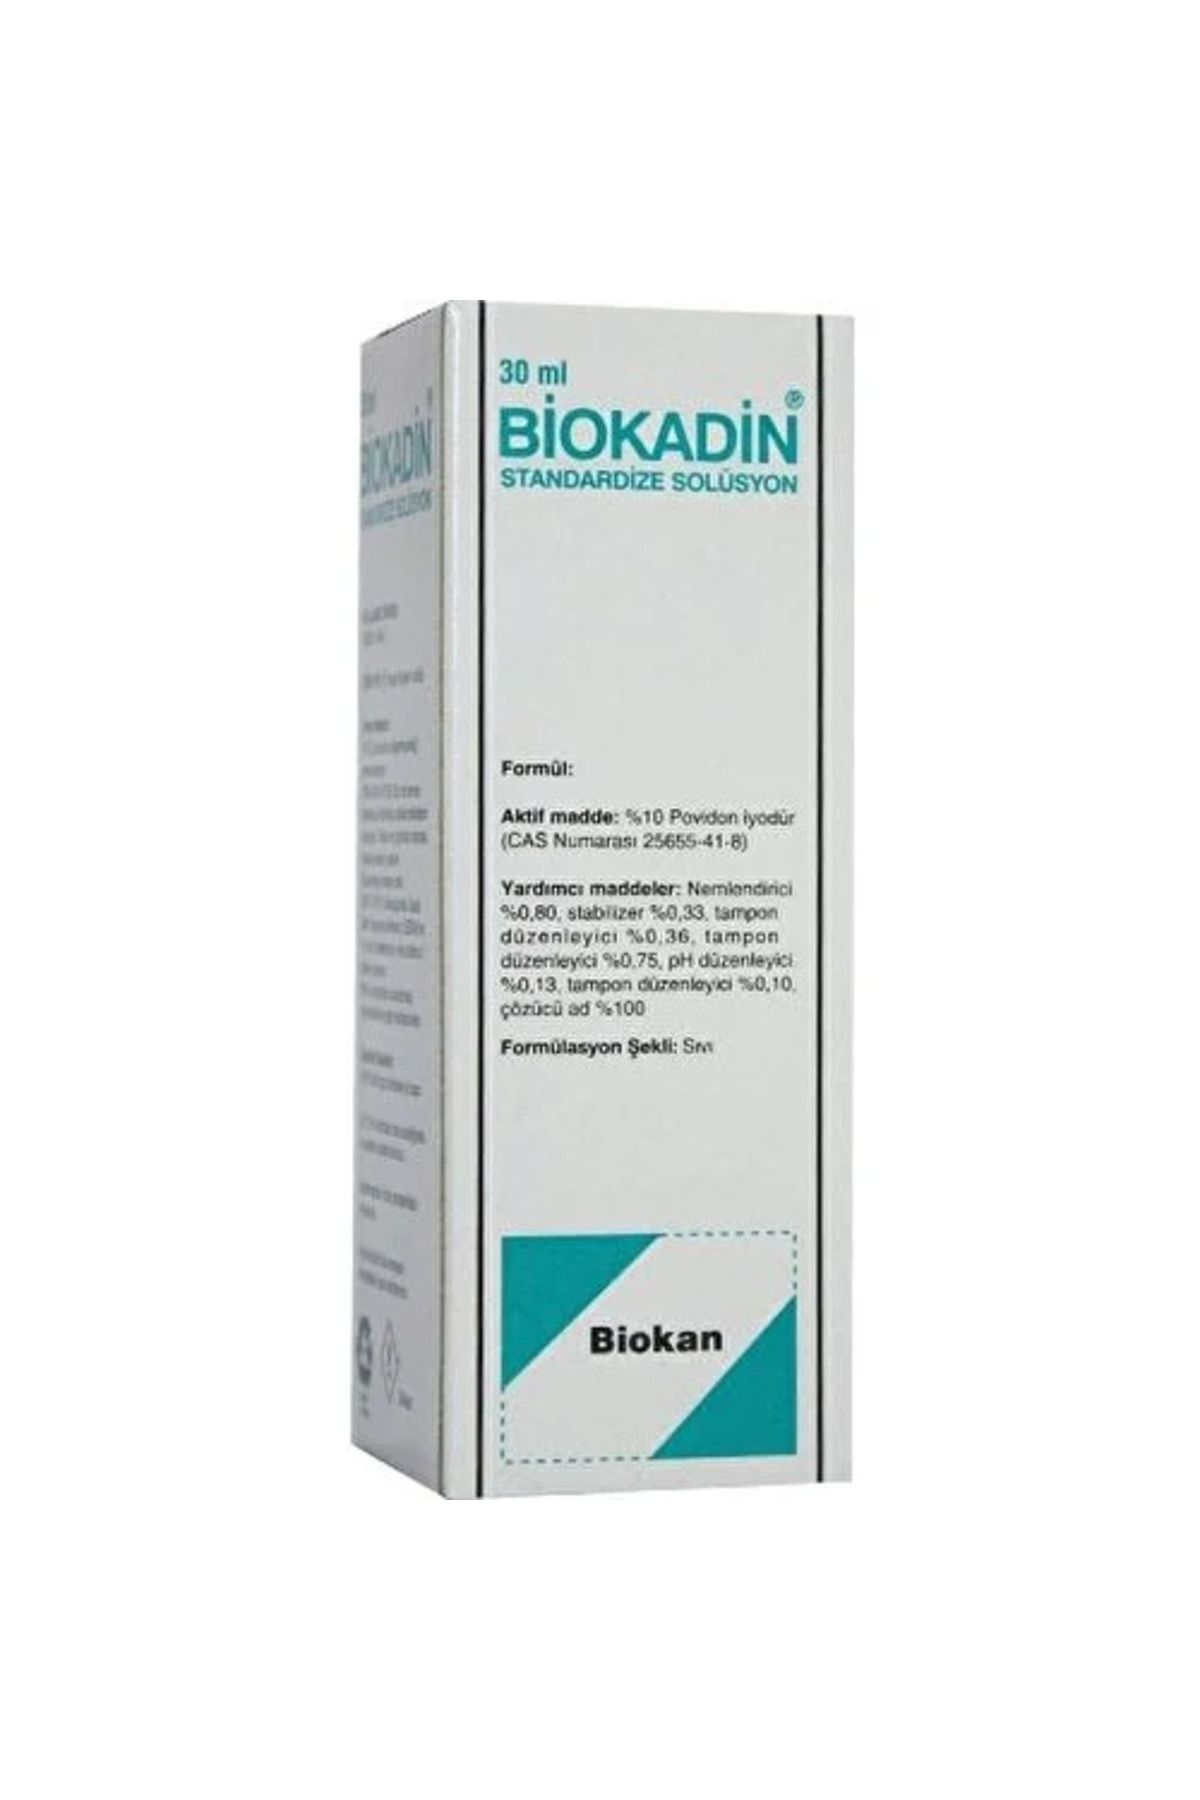 Biokat's Biokan Biokadin Standardize Solüsyon 30ml